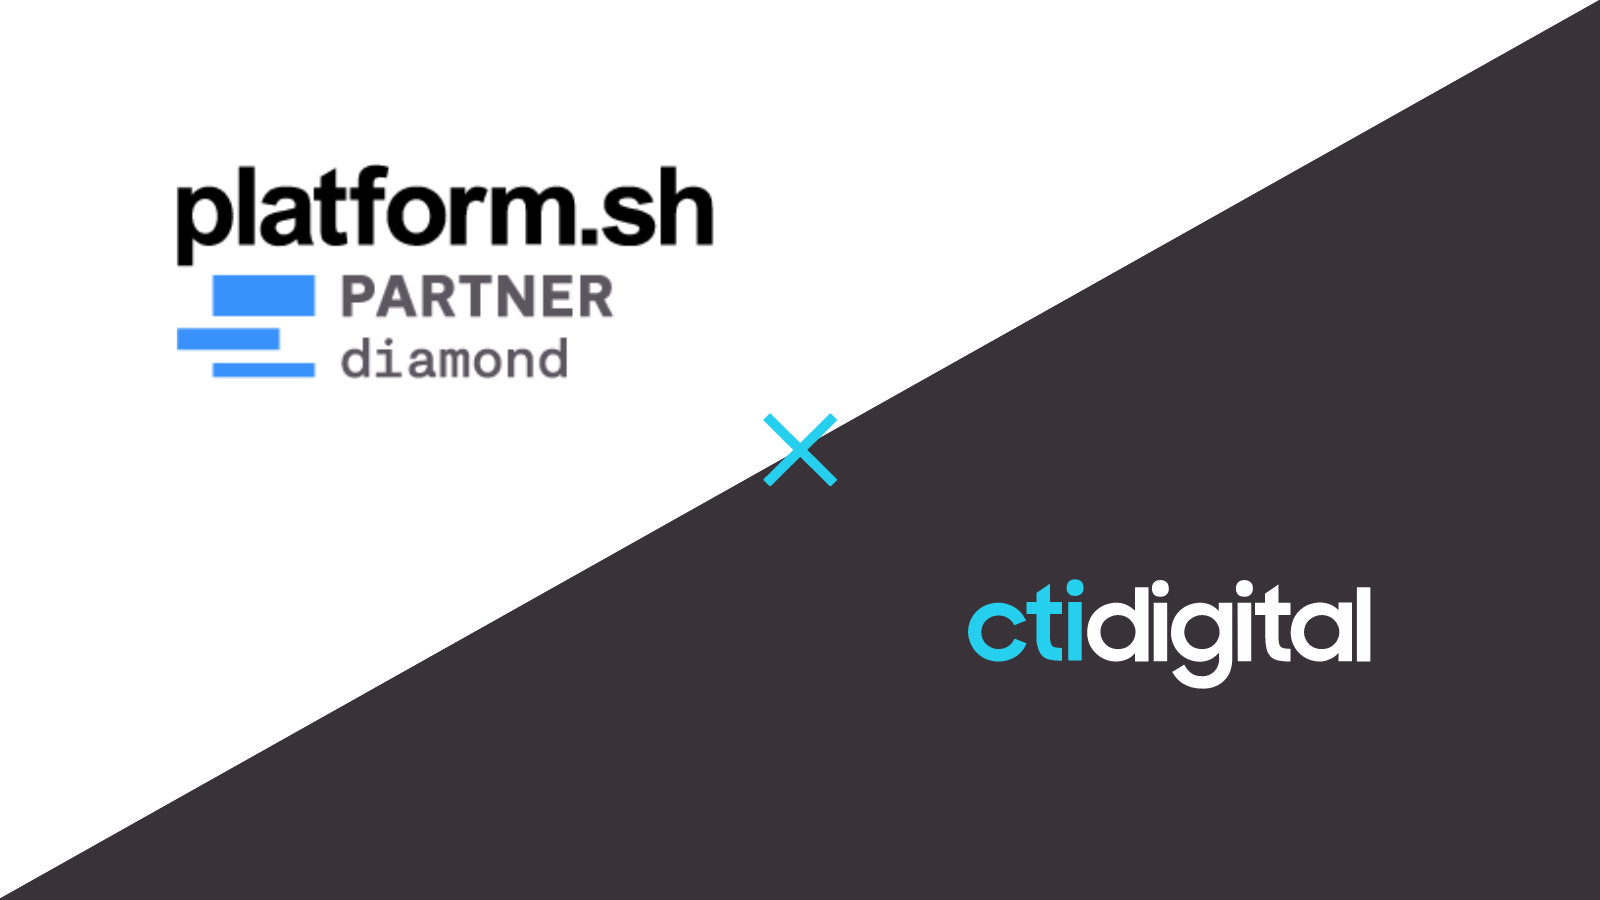 cti digital Platform.sh diamond partner 